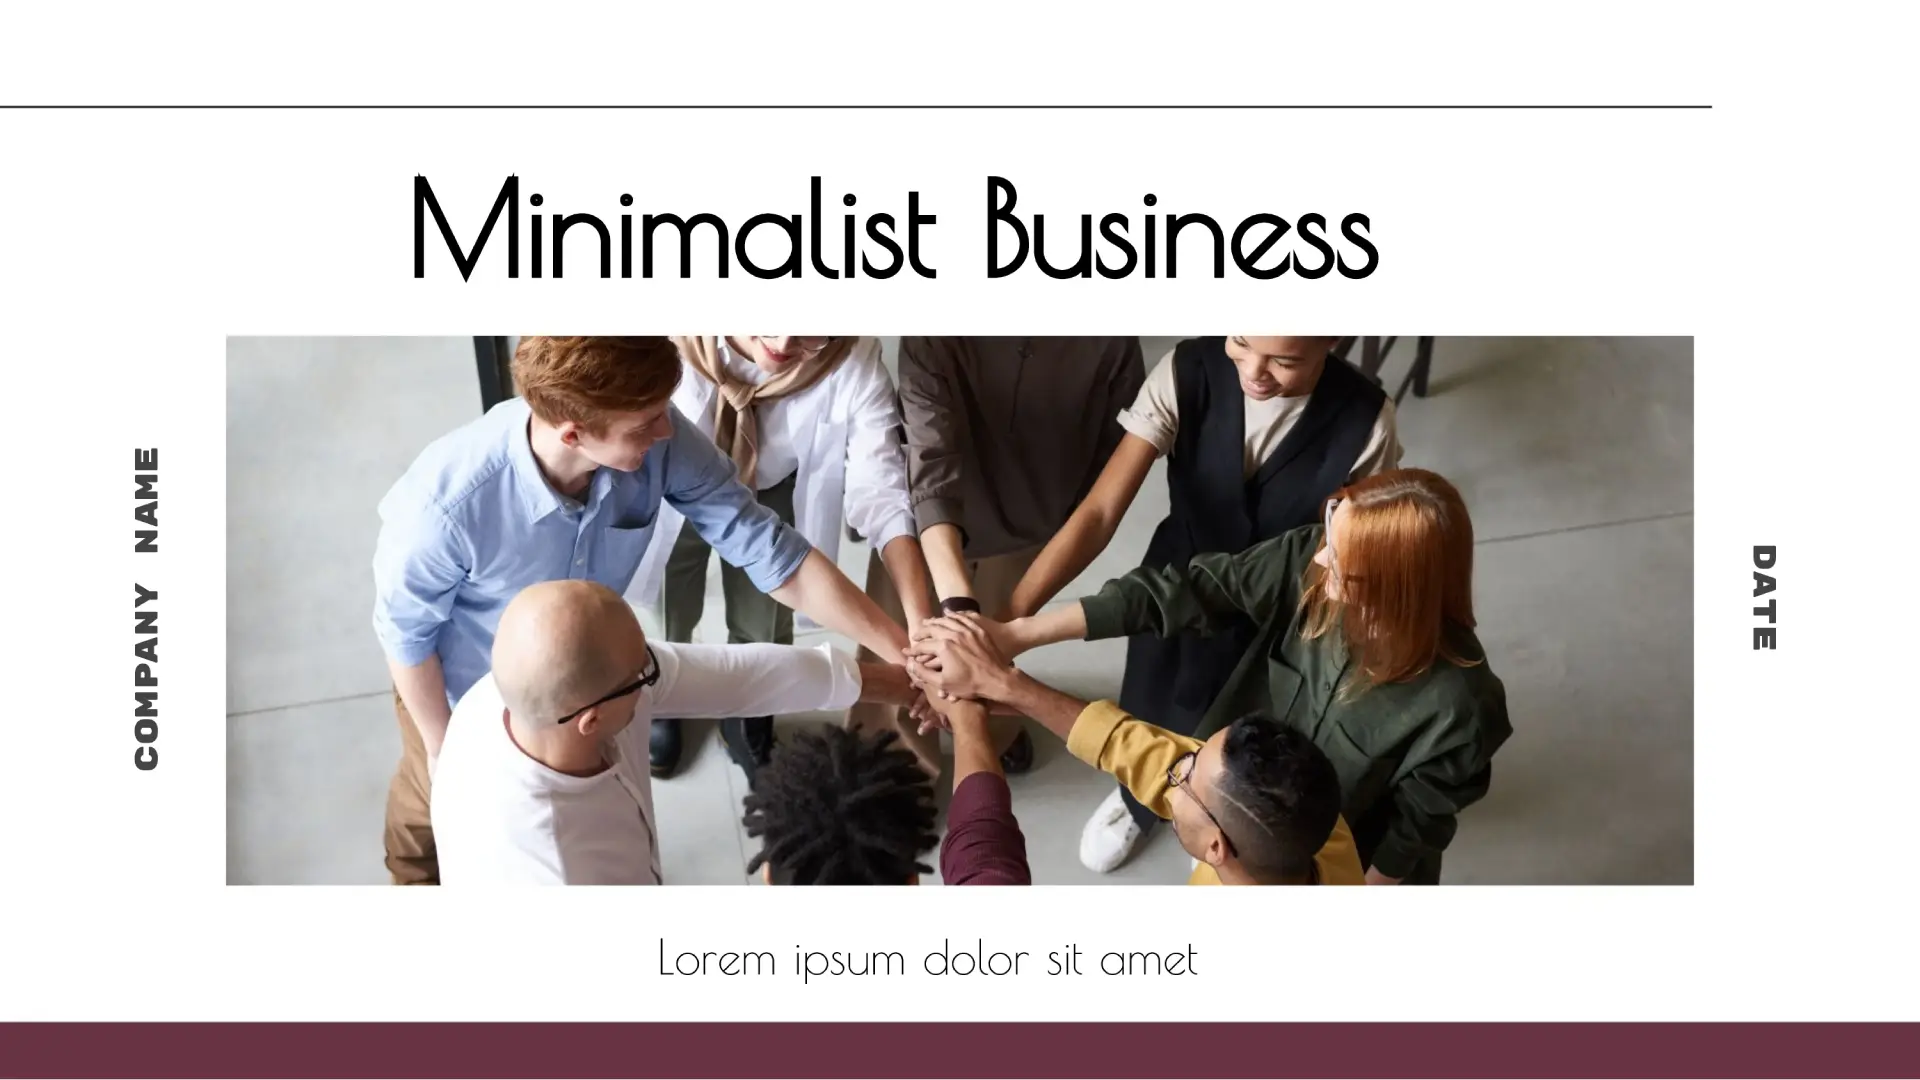 Minimalist Business Template for Google Slides